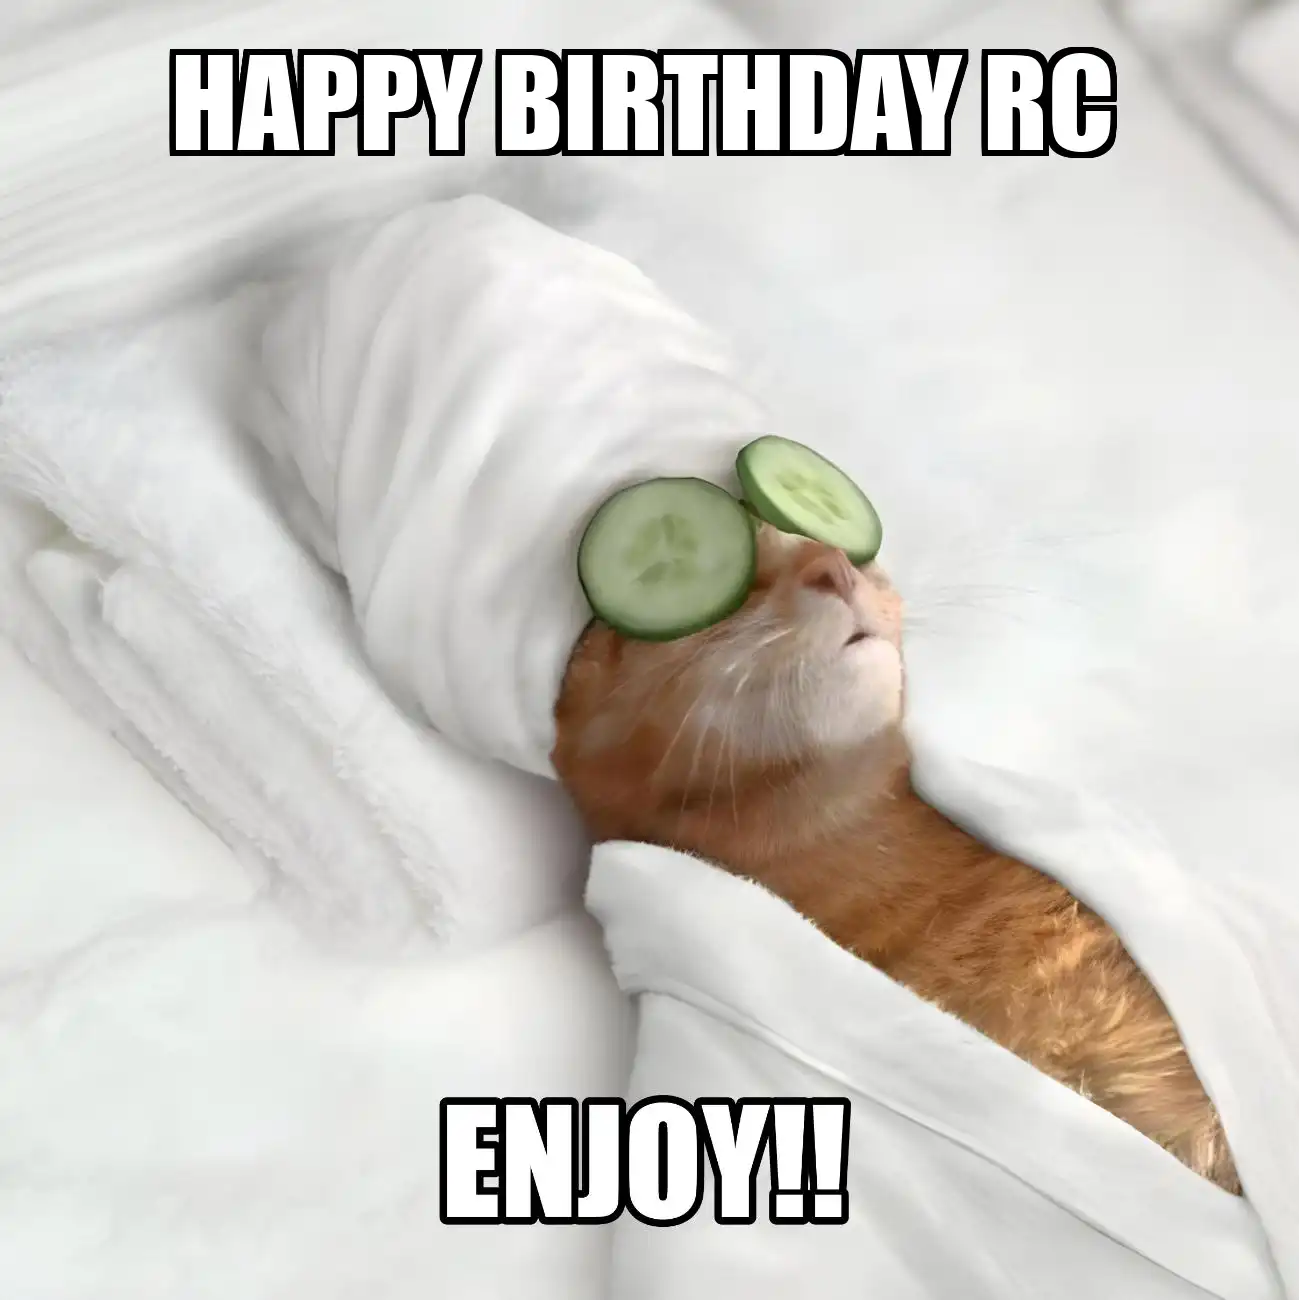 Happy Birthday Rc Enjoy Cat Meme